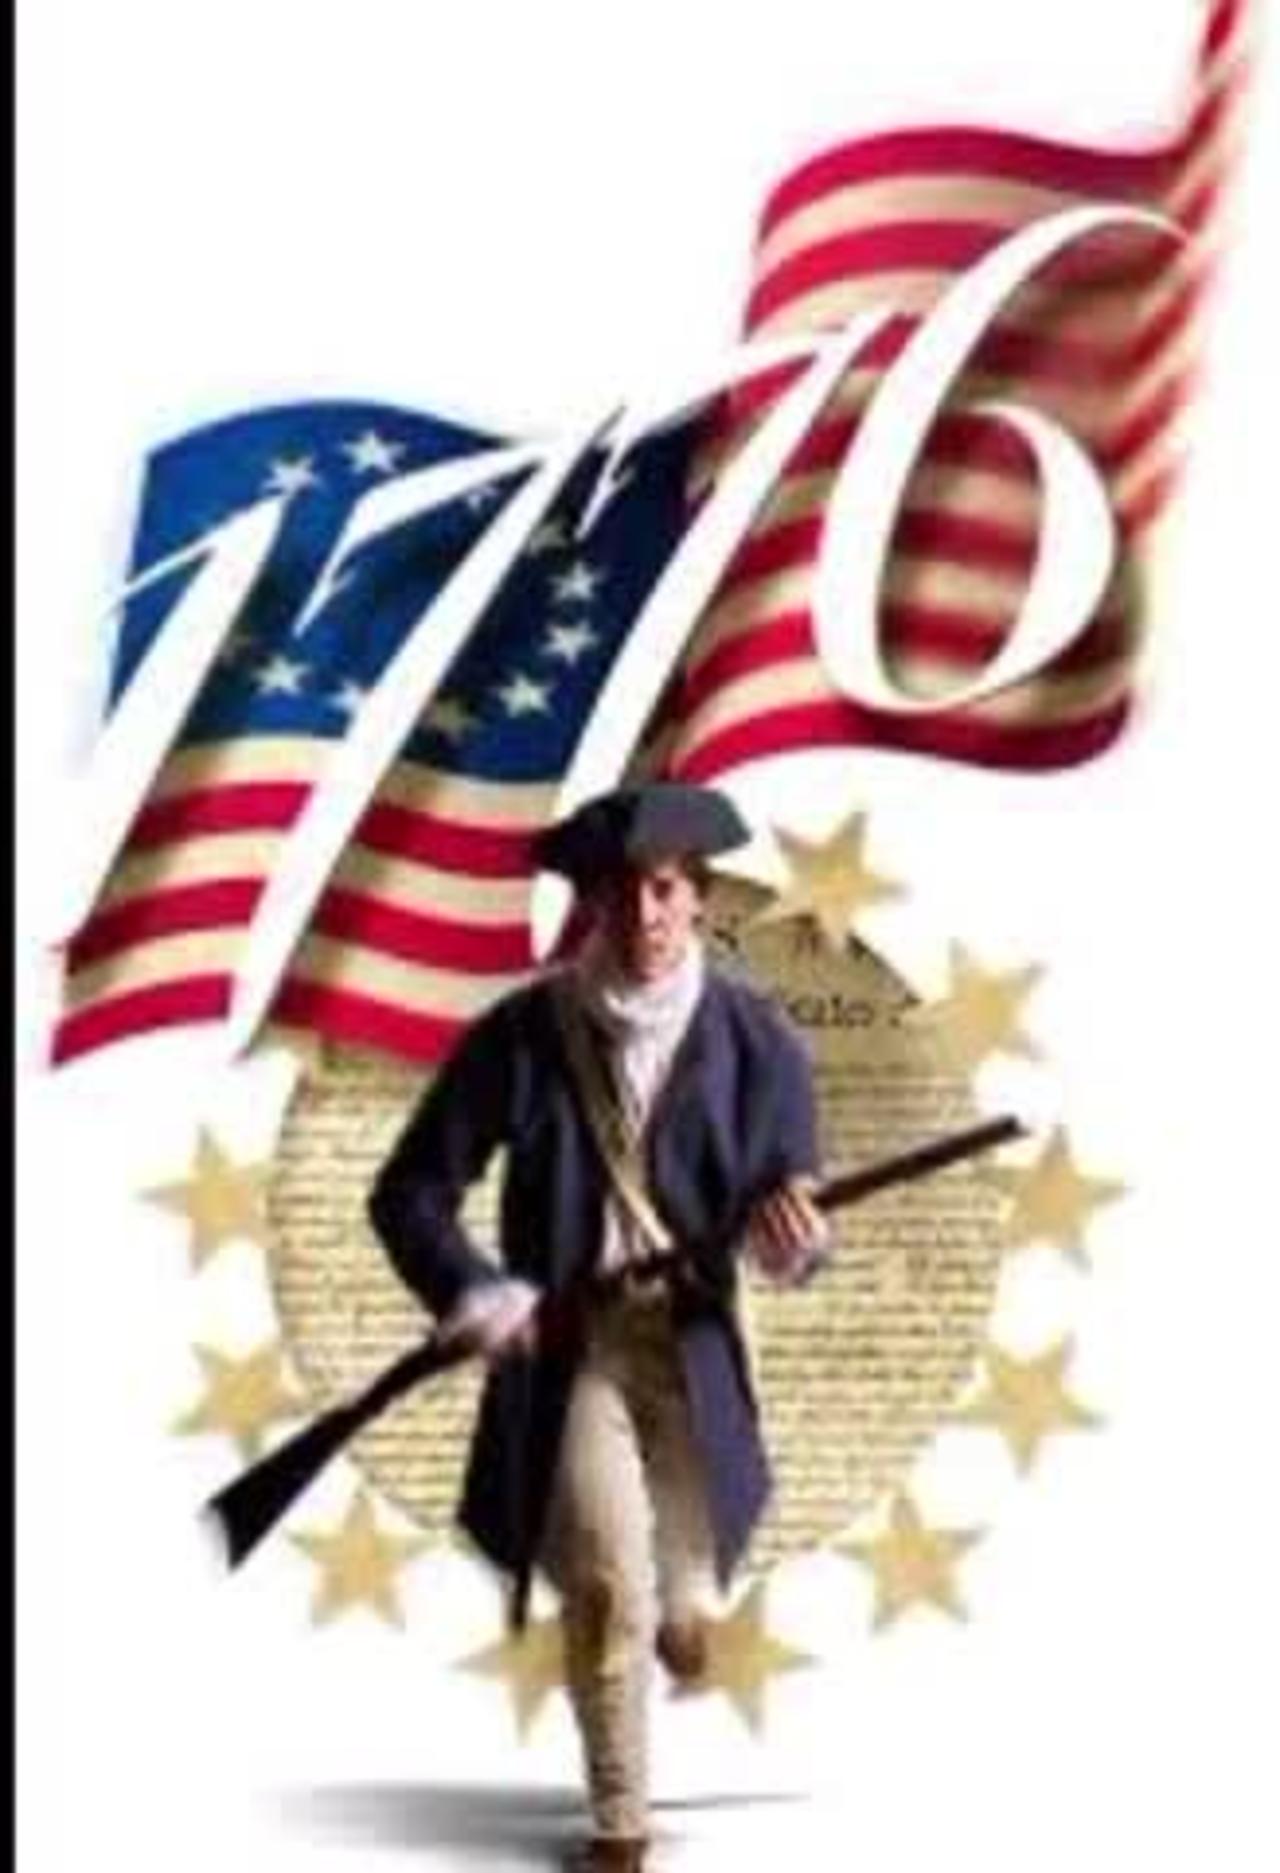 Live - 1776 Restoration Movement - Bunker Hill